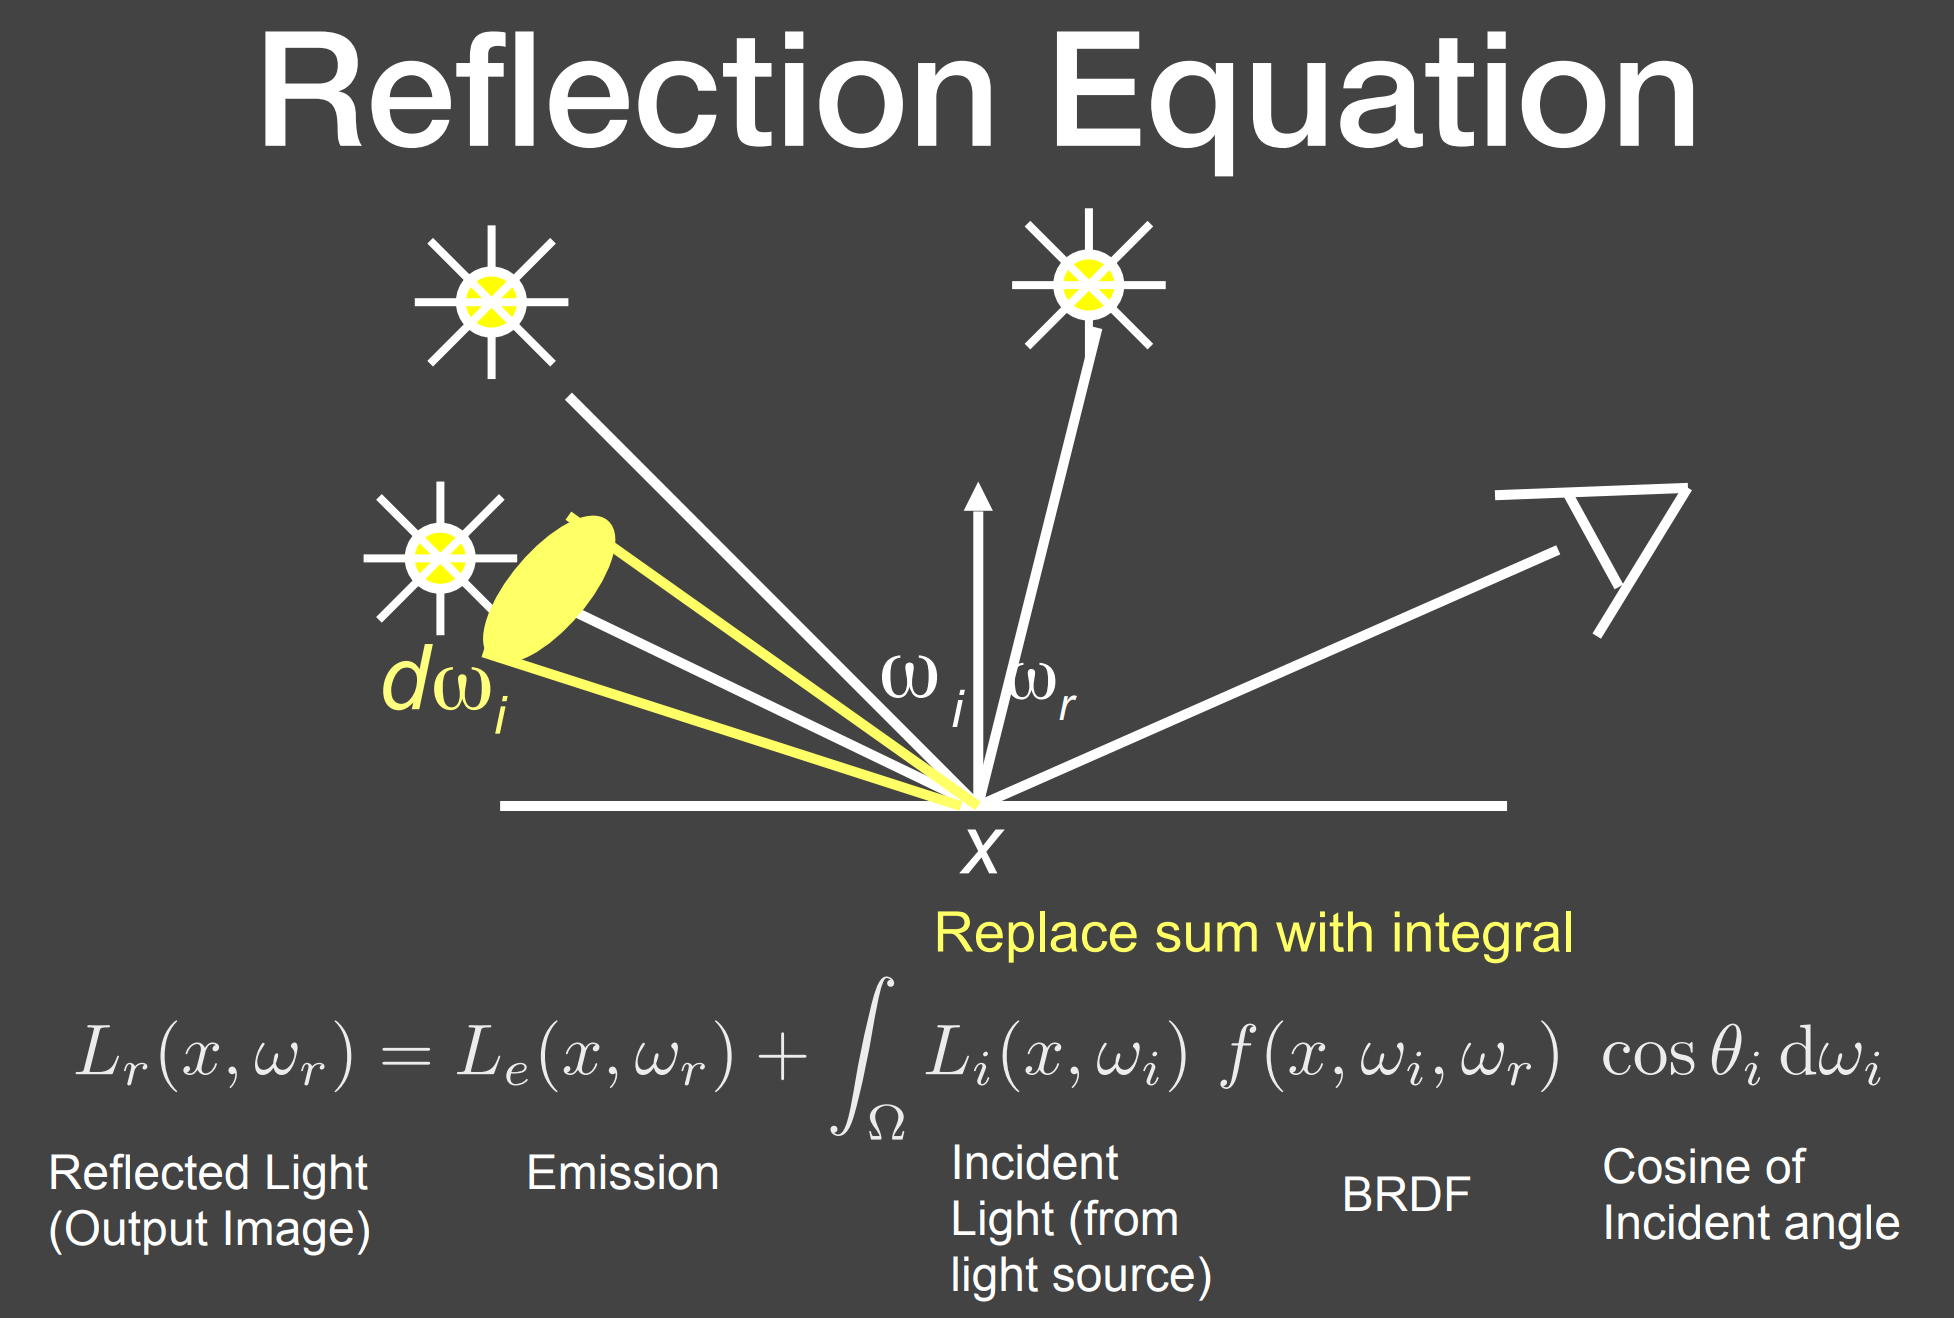 ReflectionEquation